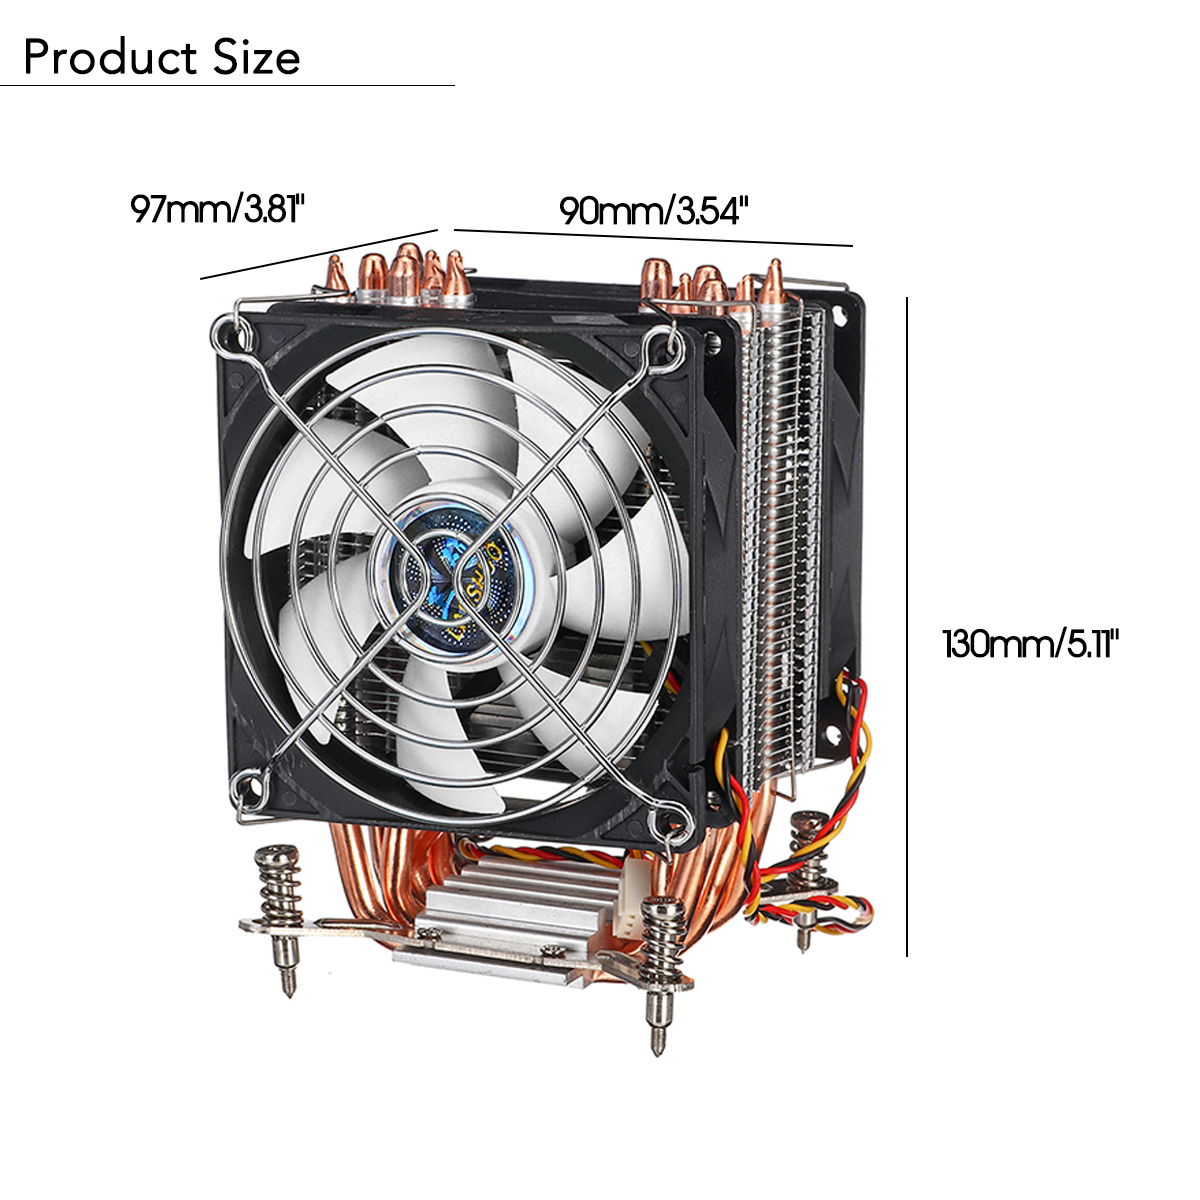 3 Pin 90cm Double Cooling Fan 6 Heat Pipes Cooler Heatsink for 115X 1366 Motherboard 16